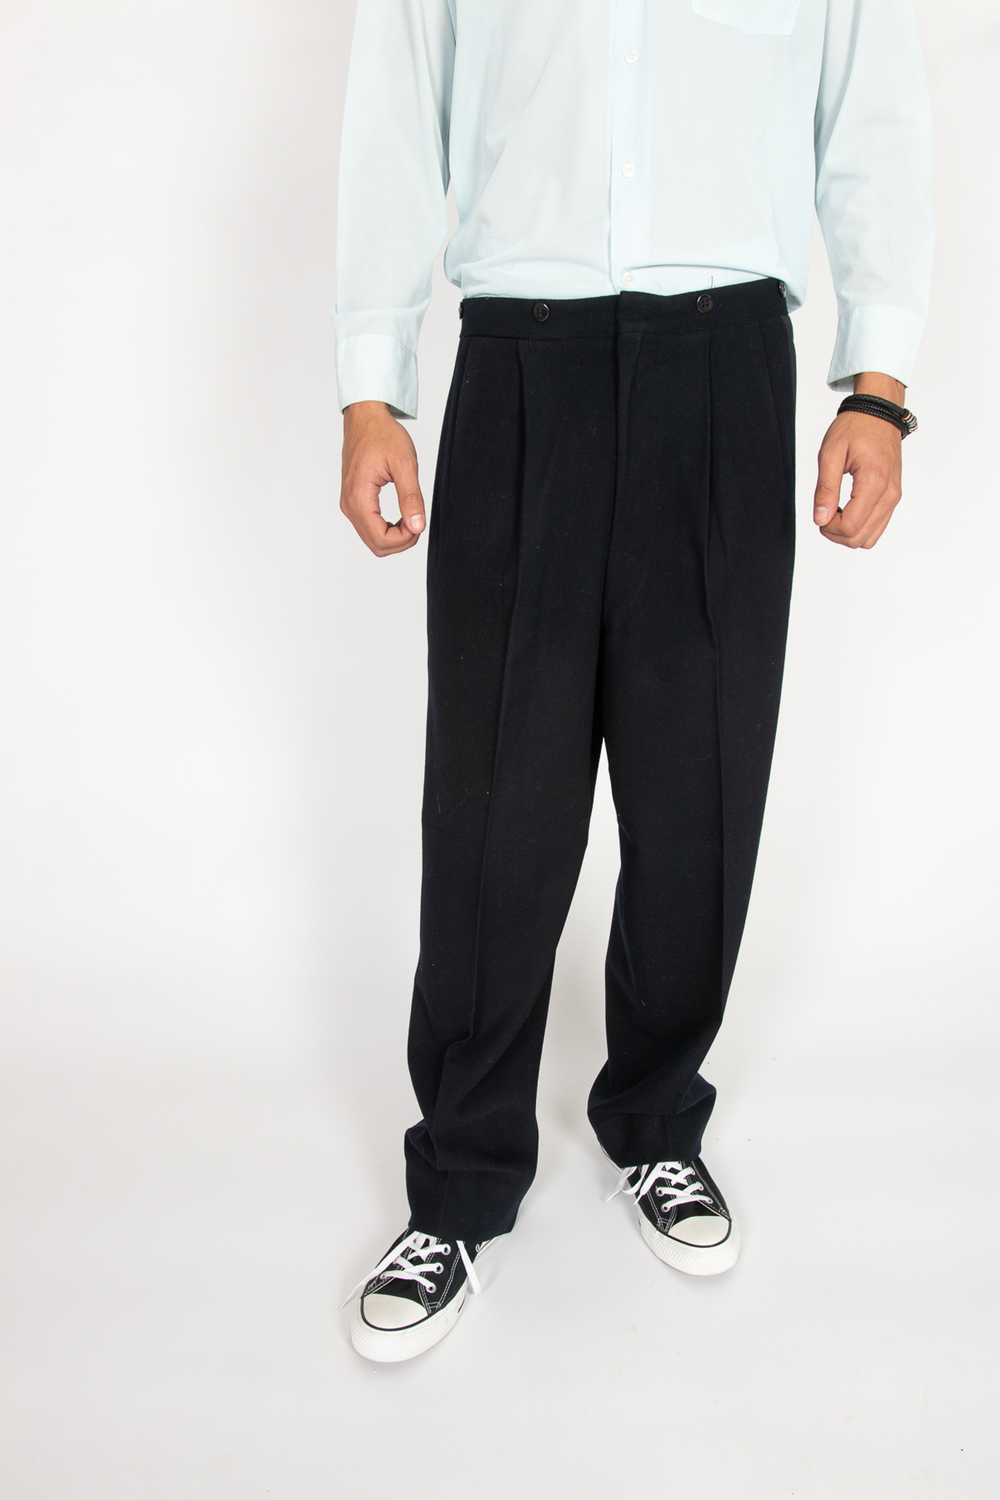 Vintage 1950s Tuxedo Pants 421 - image 1